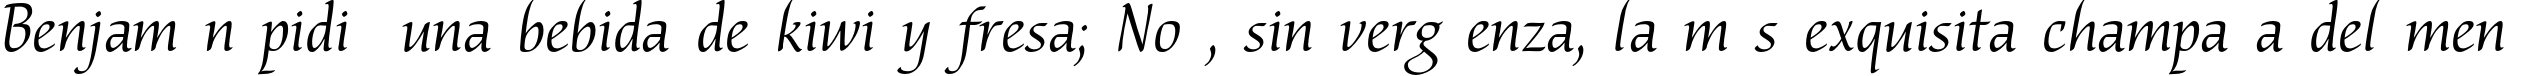 Пример написания шрифтом NataliScript текста на испанском